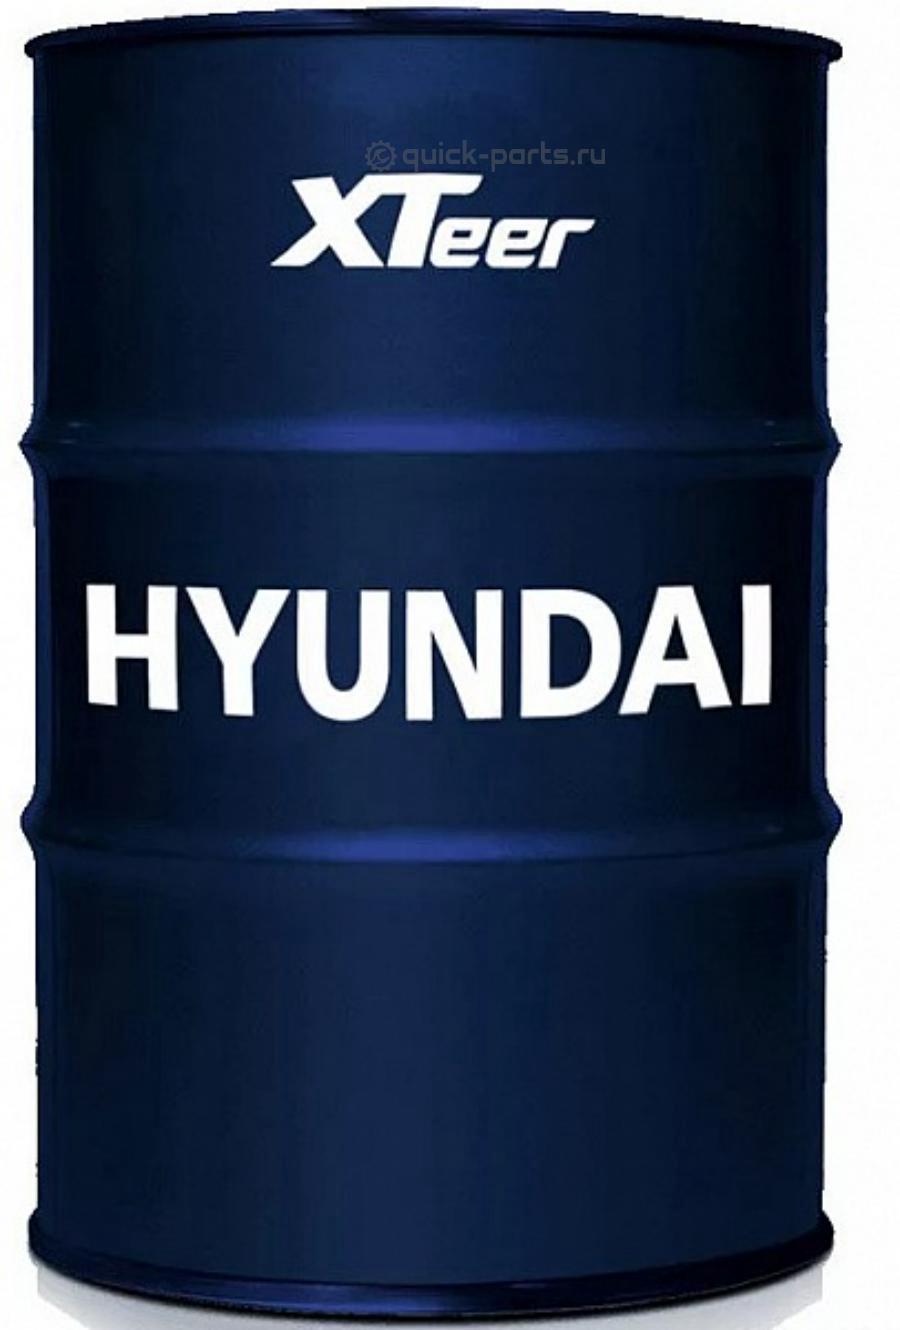 1200044 HYUNDAI-XTEER Масло моторное синтетическое Gasoline G500 10W-40, 200л